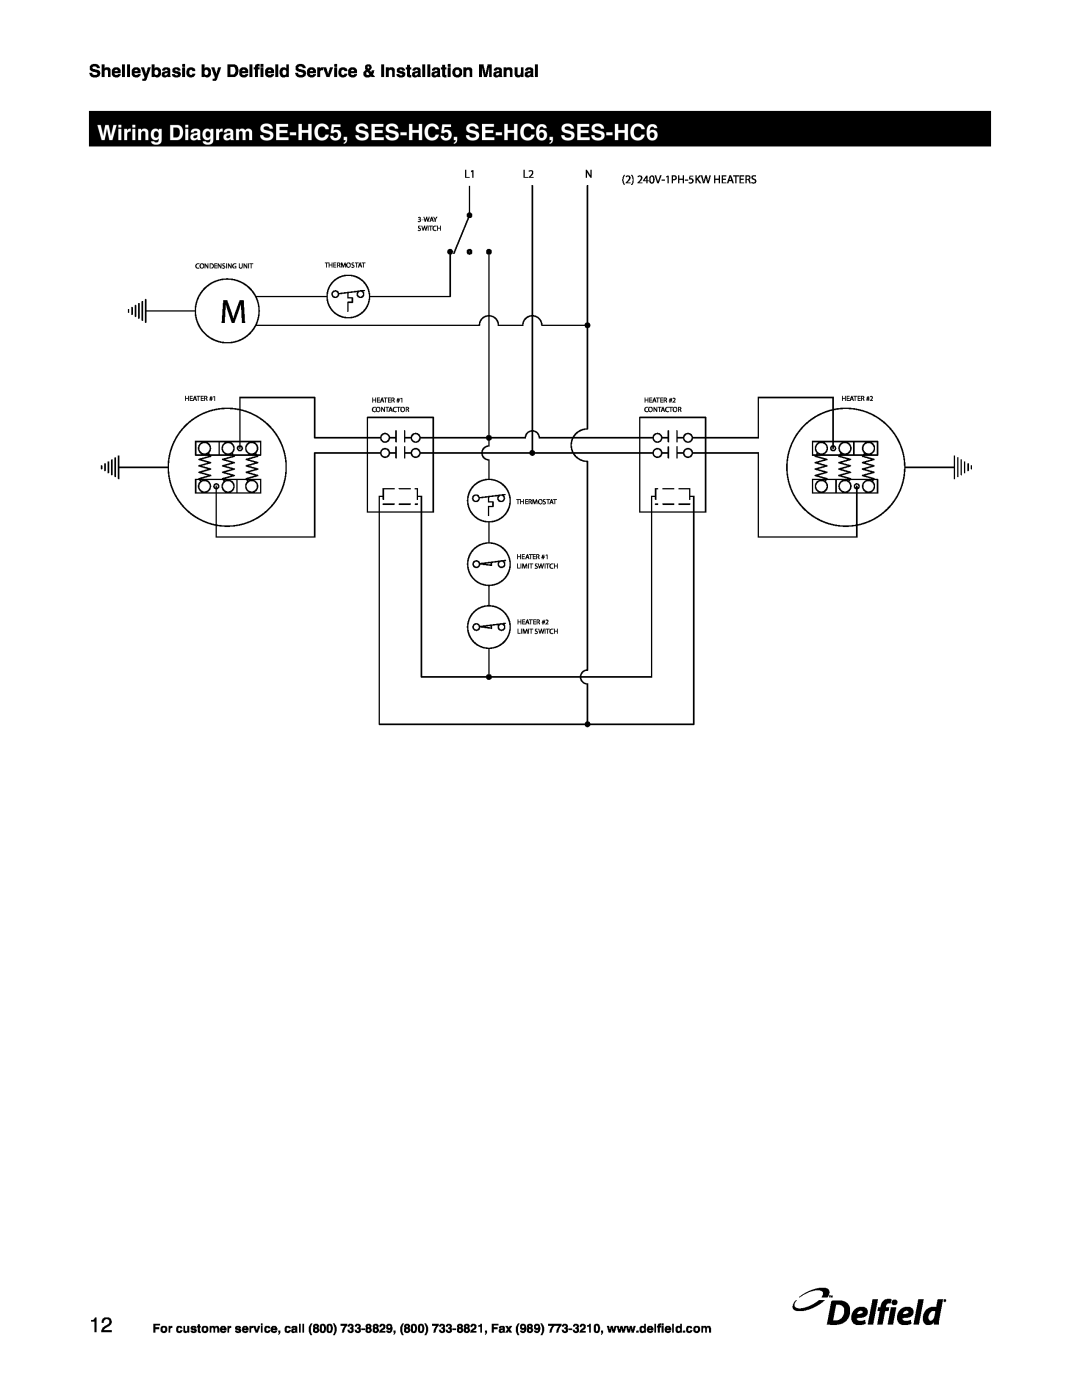 Delfield Shelleybasic manual Wiring Diagram SE-HC5, SES-HC5, SE-HC6, SES-HC6, Delfield, 2 240V-1PH-5KW HEATERS 